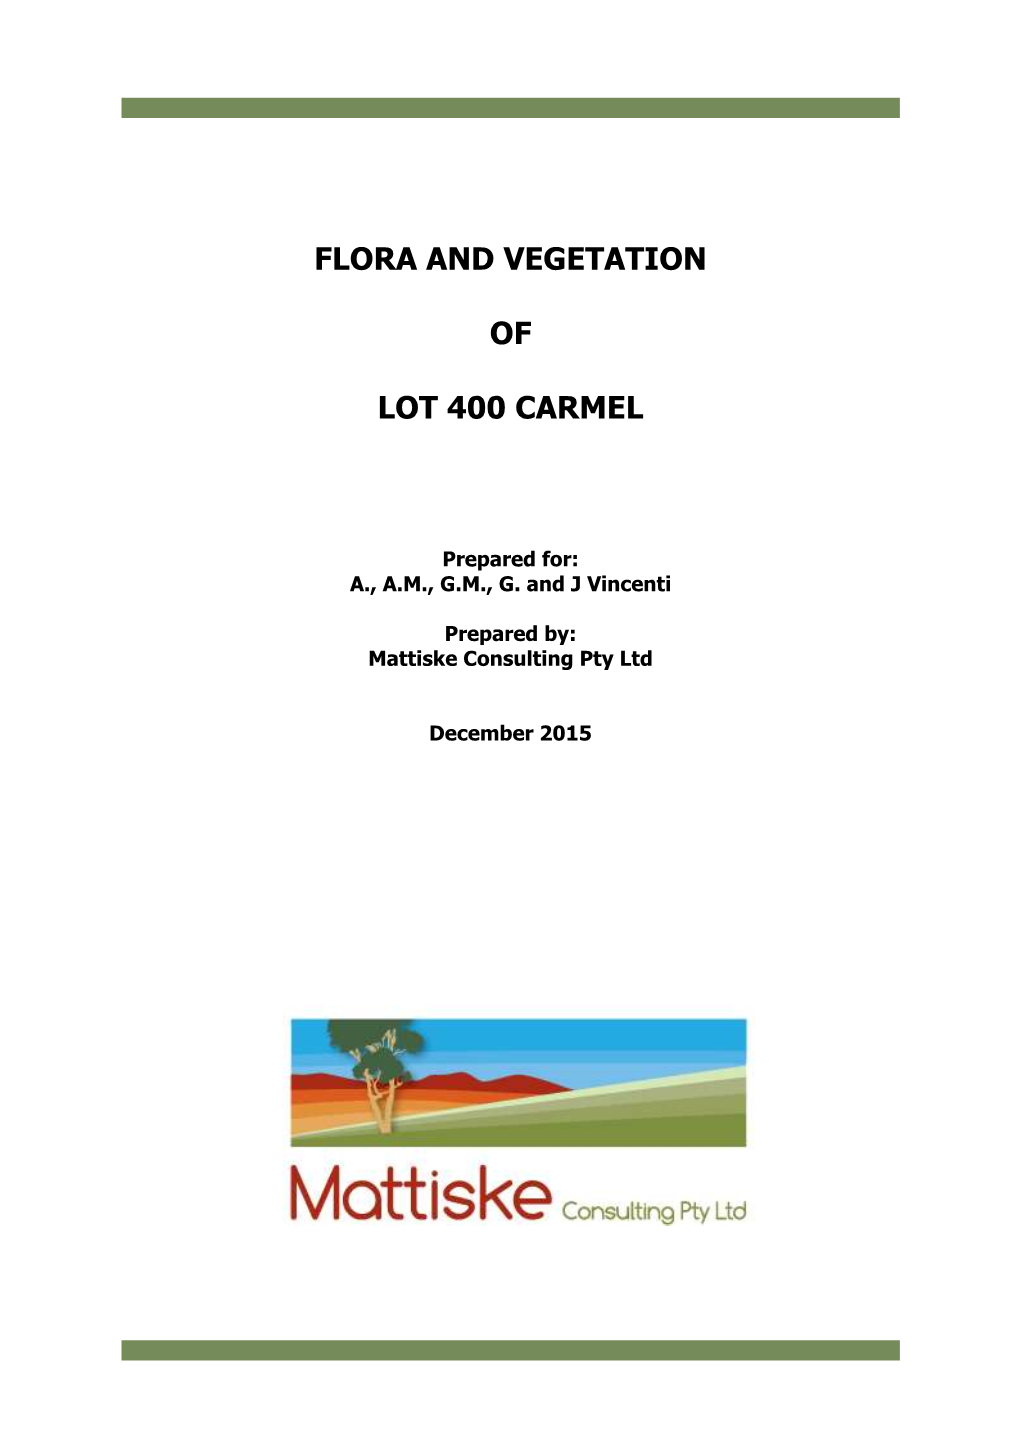 Flora and Vegetation of Lot 400 Carmel